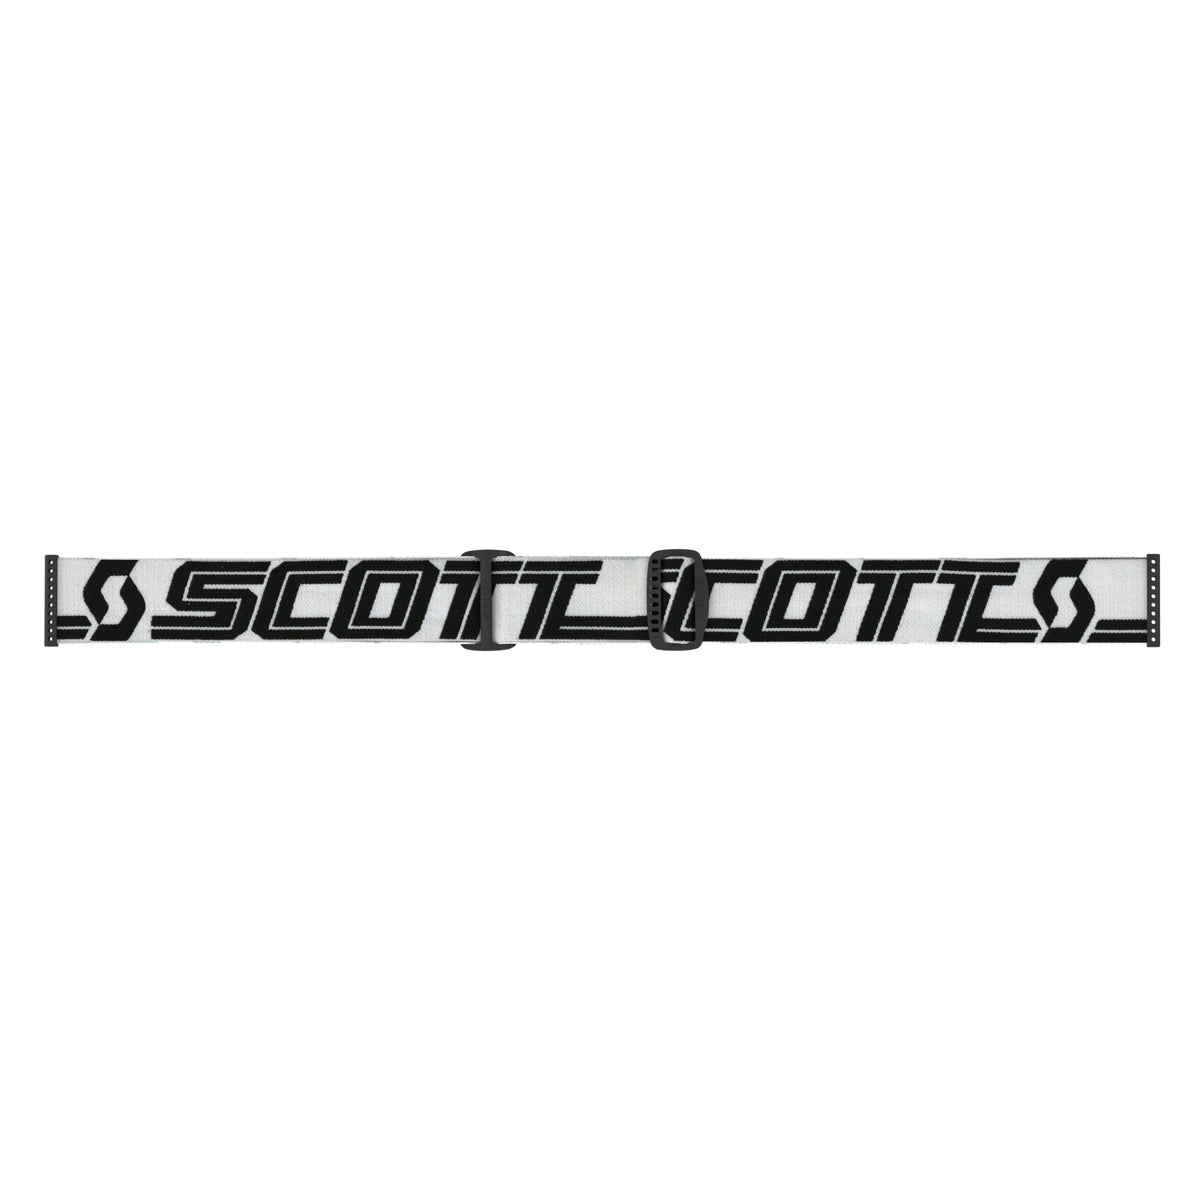 Scott Primal MX Goggles